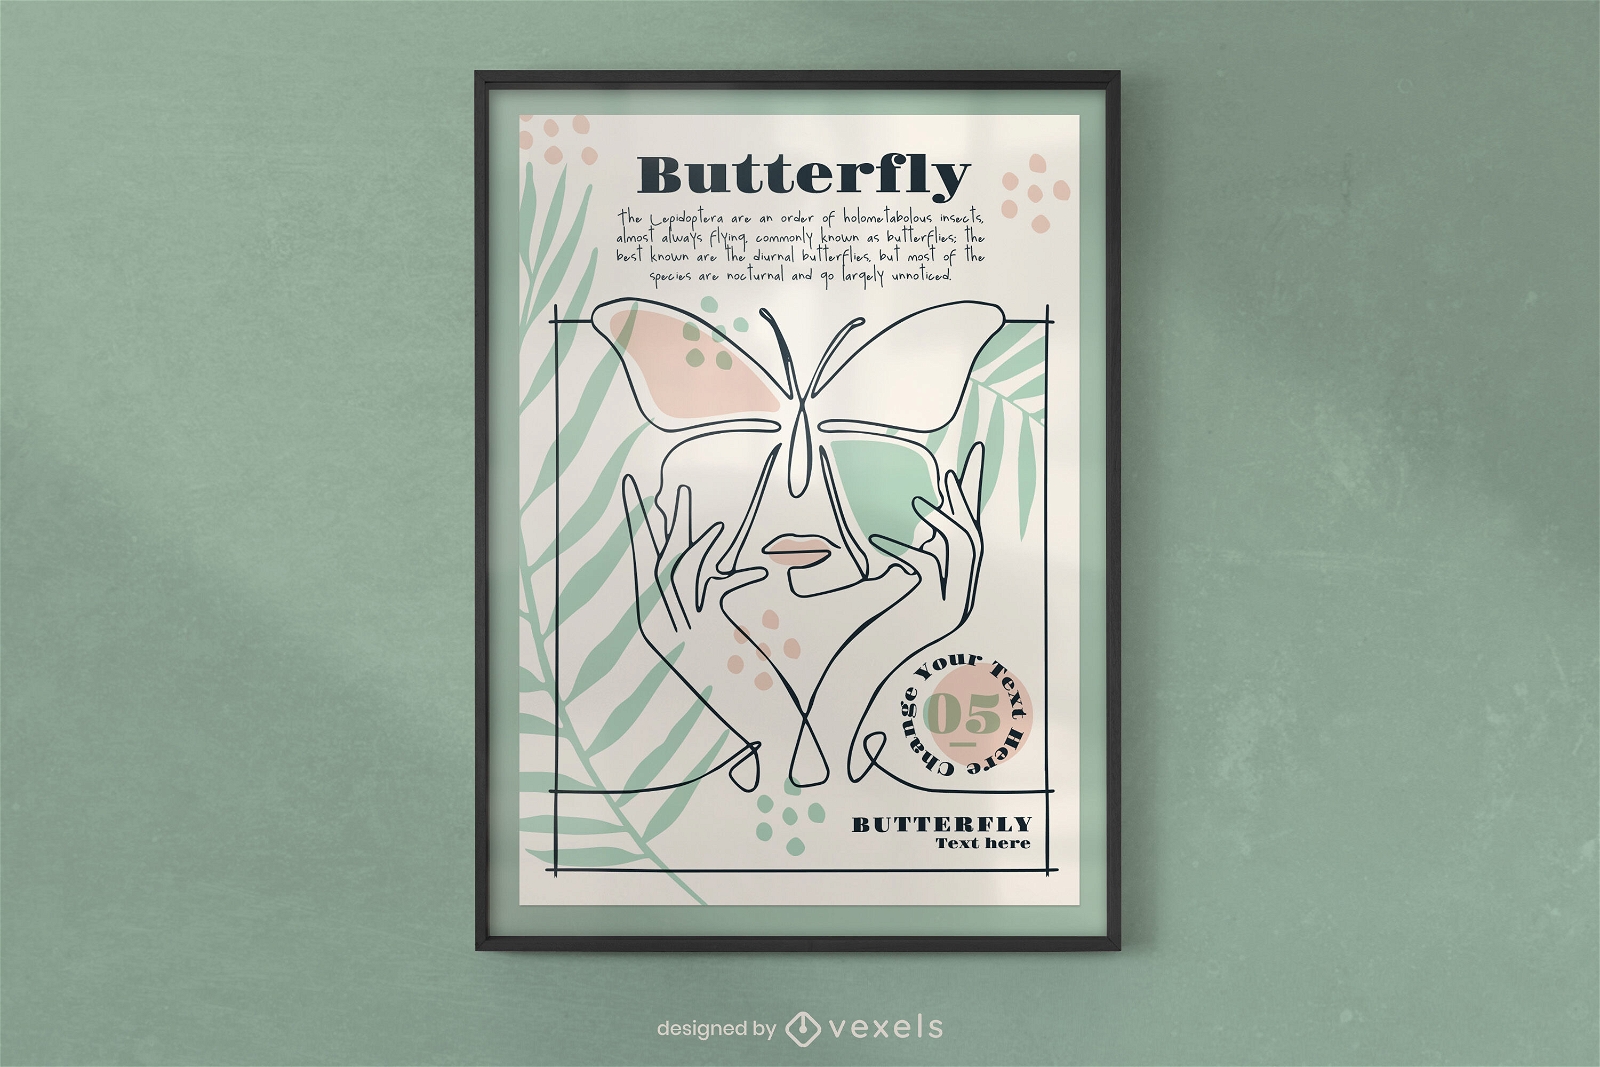 Monoline butterfly poster design